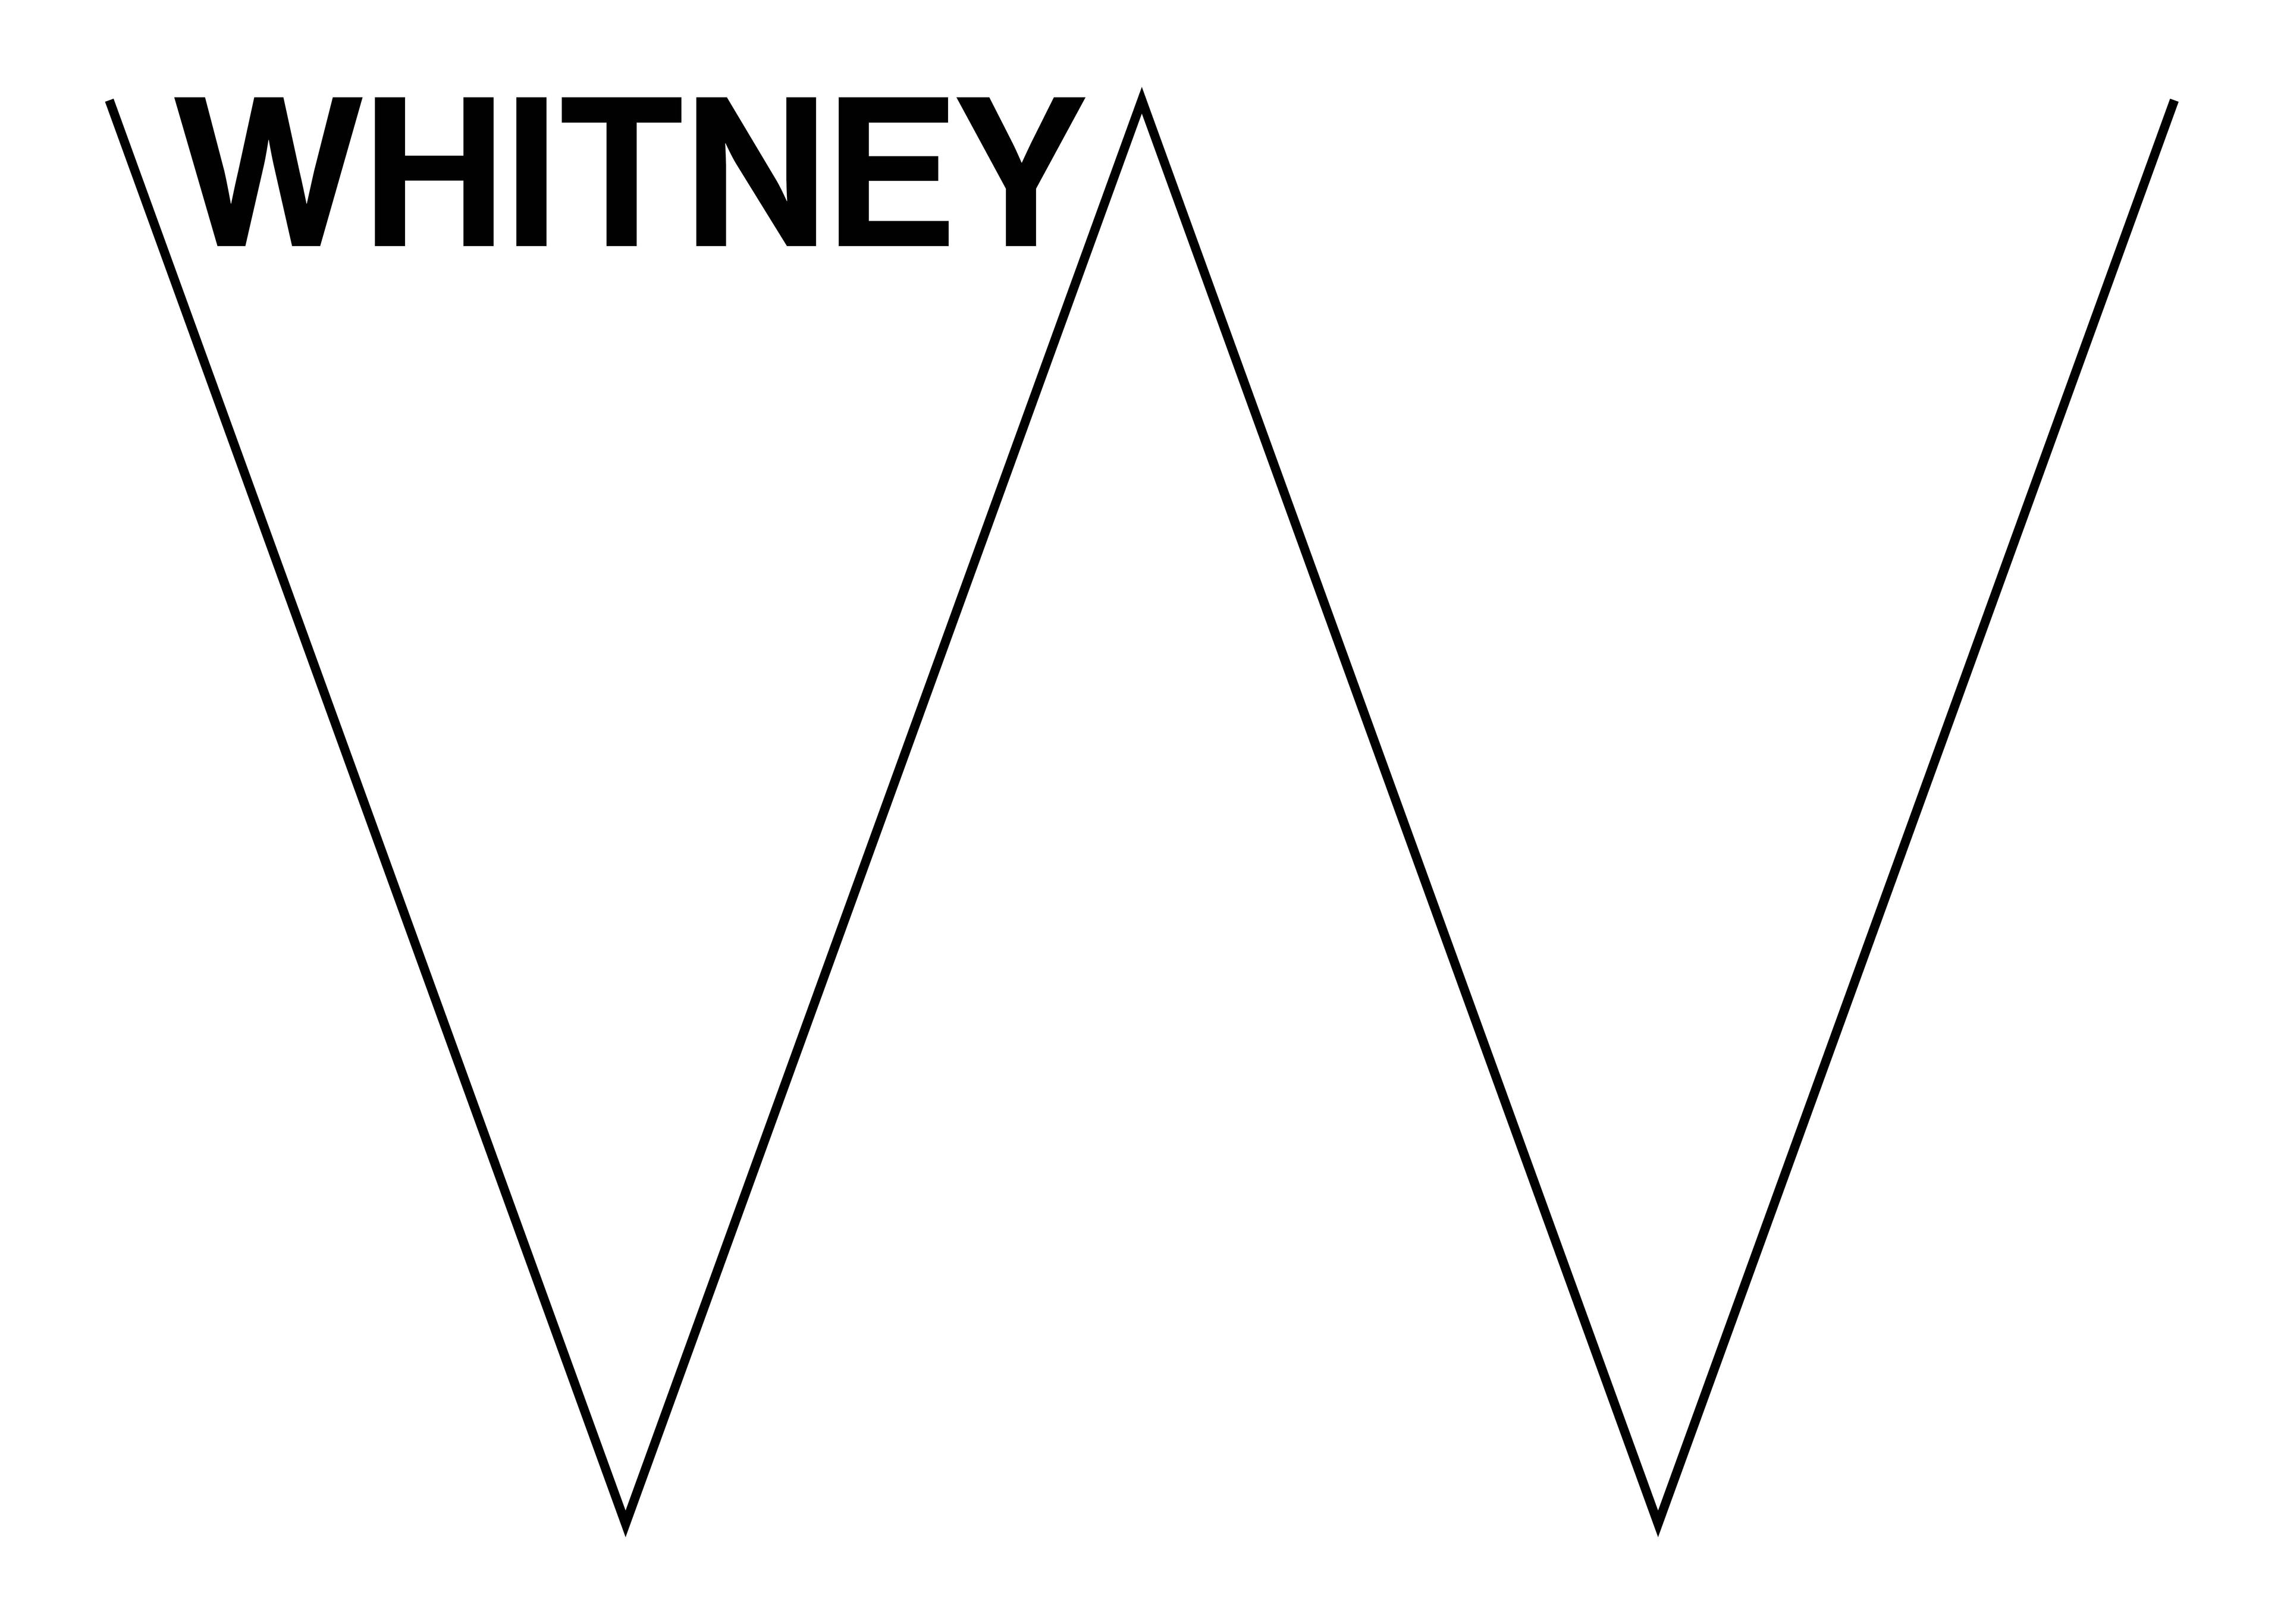 Whitney logo on a white background